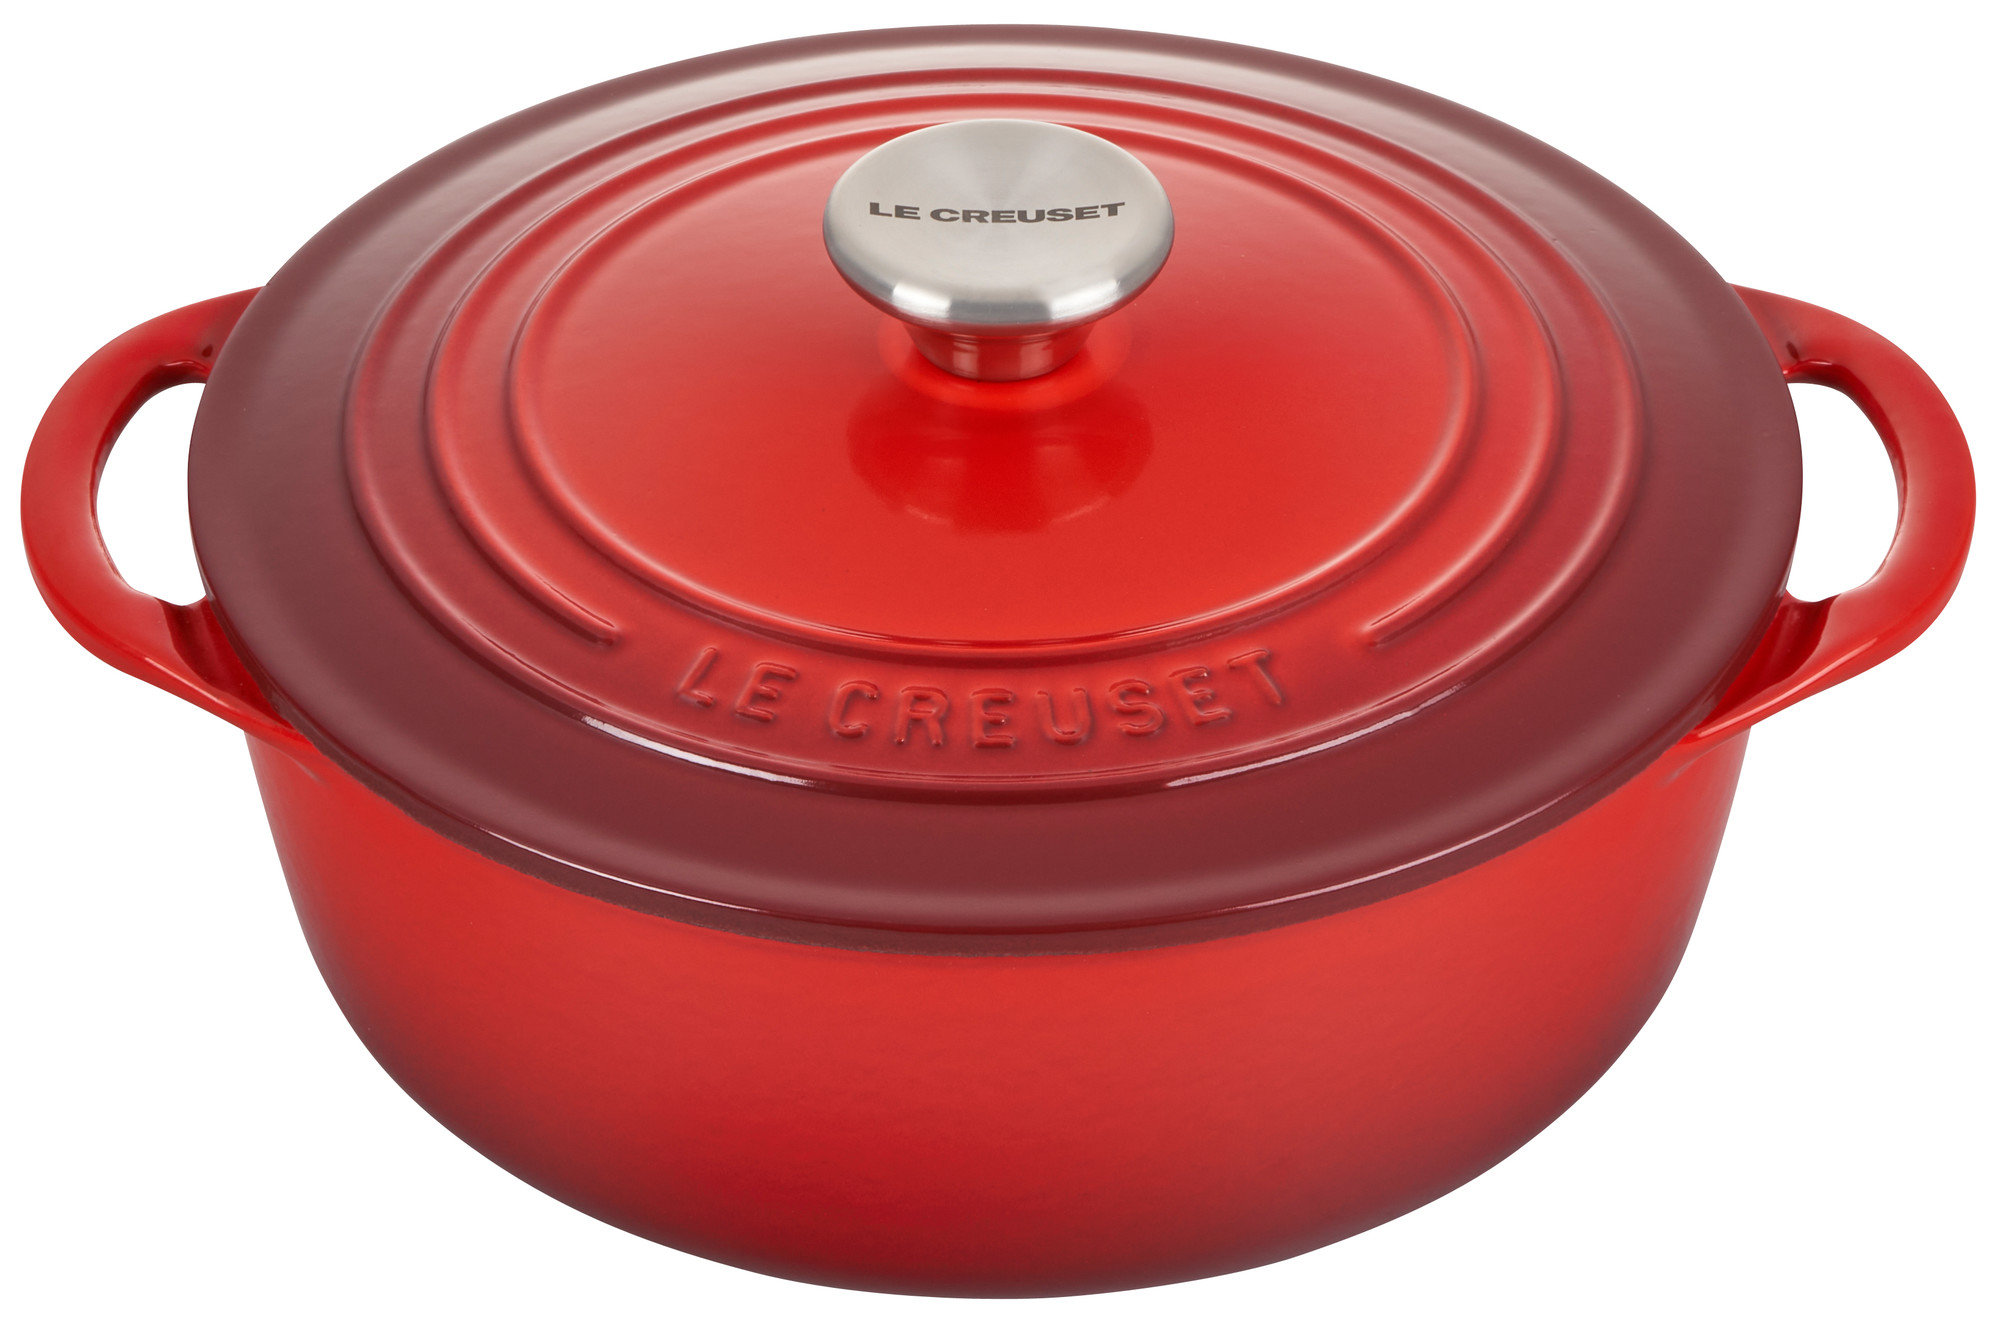 Le Creuset Signature Round 4.5-Qt. Cerise Red Enameled Cast Iron